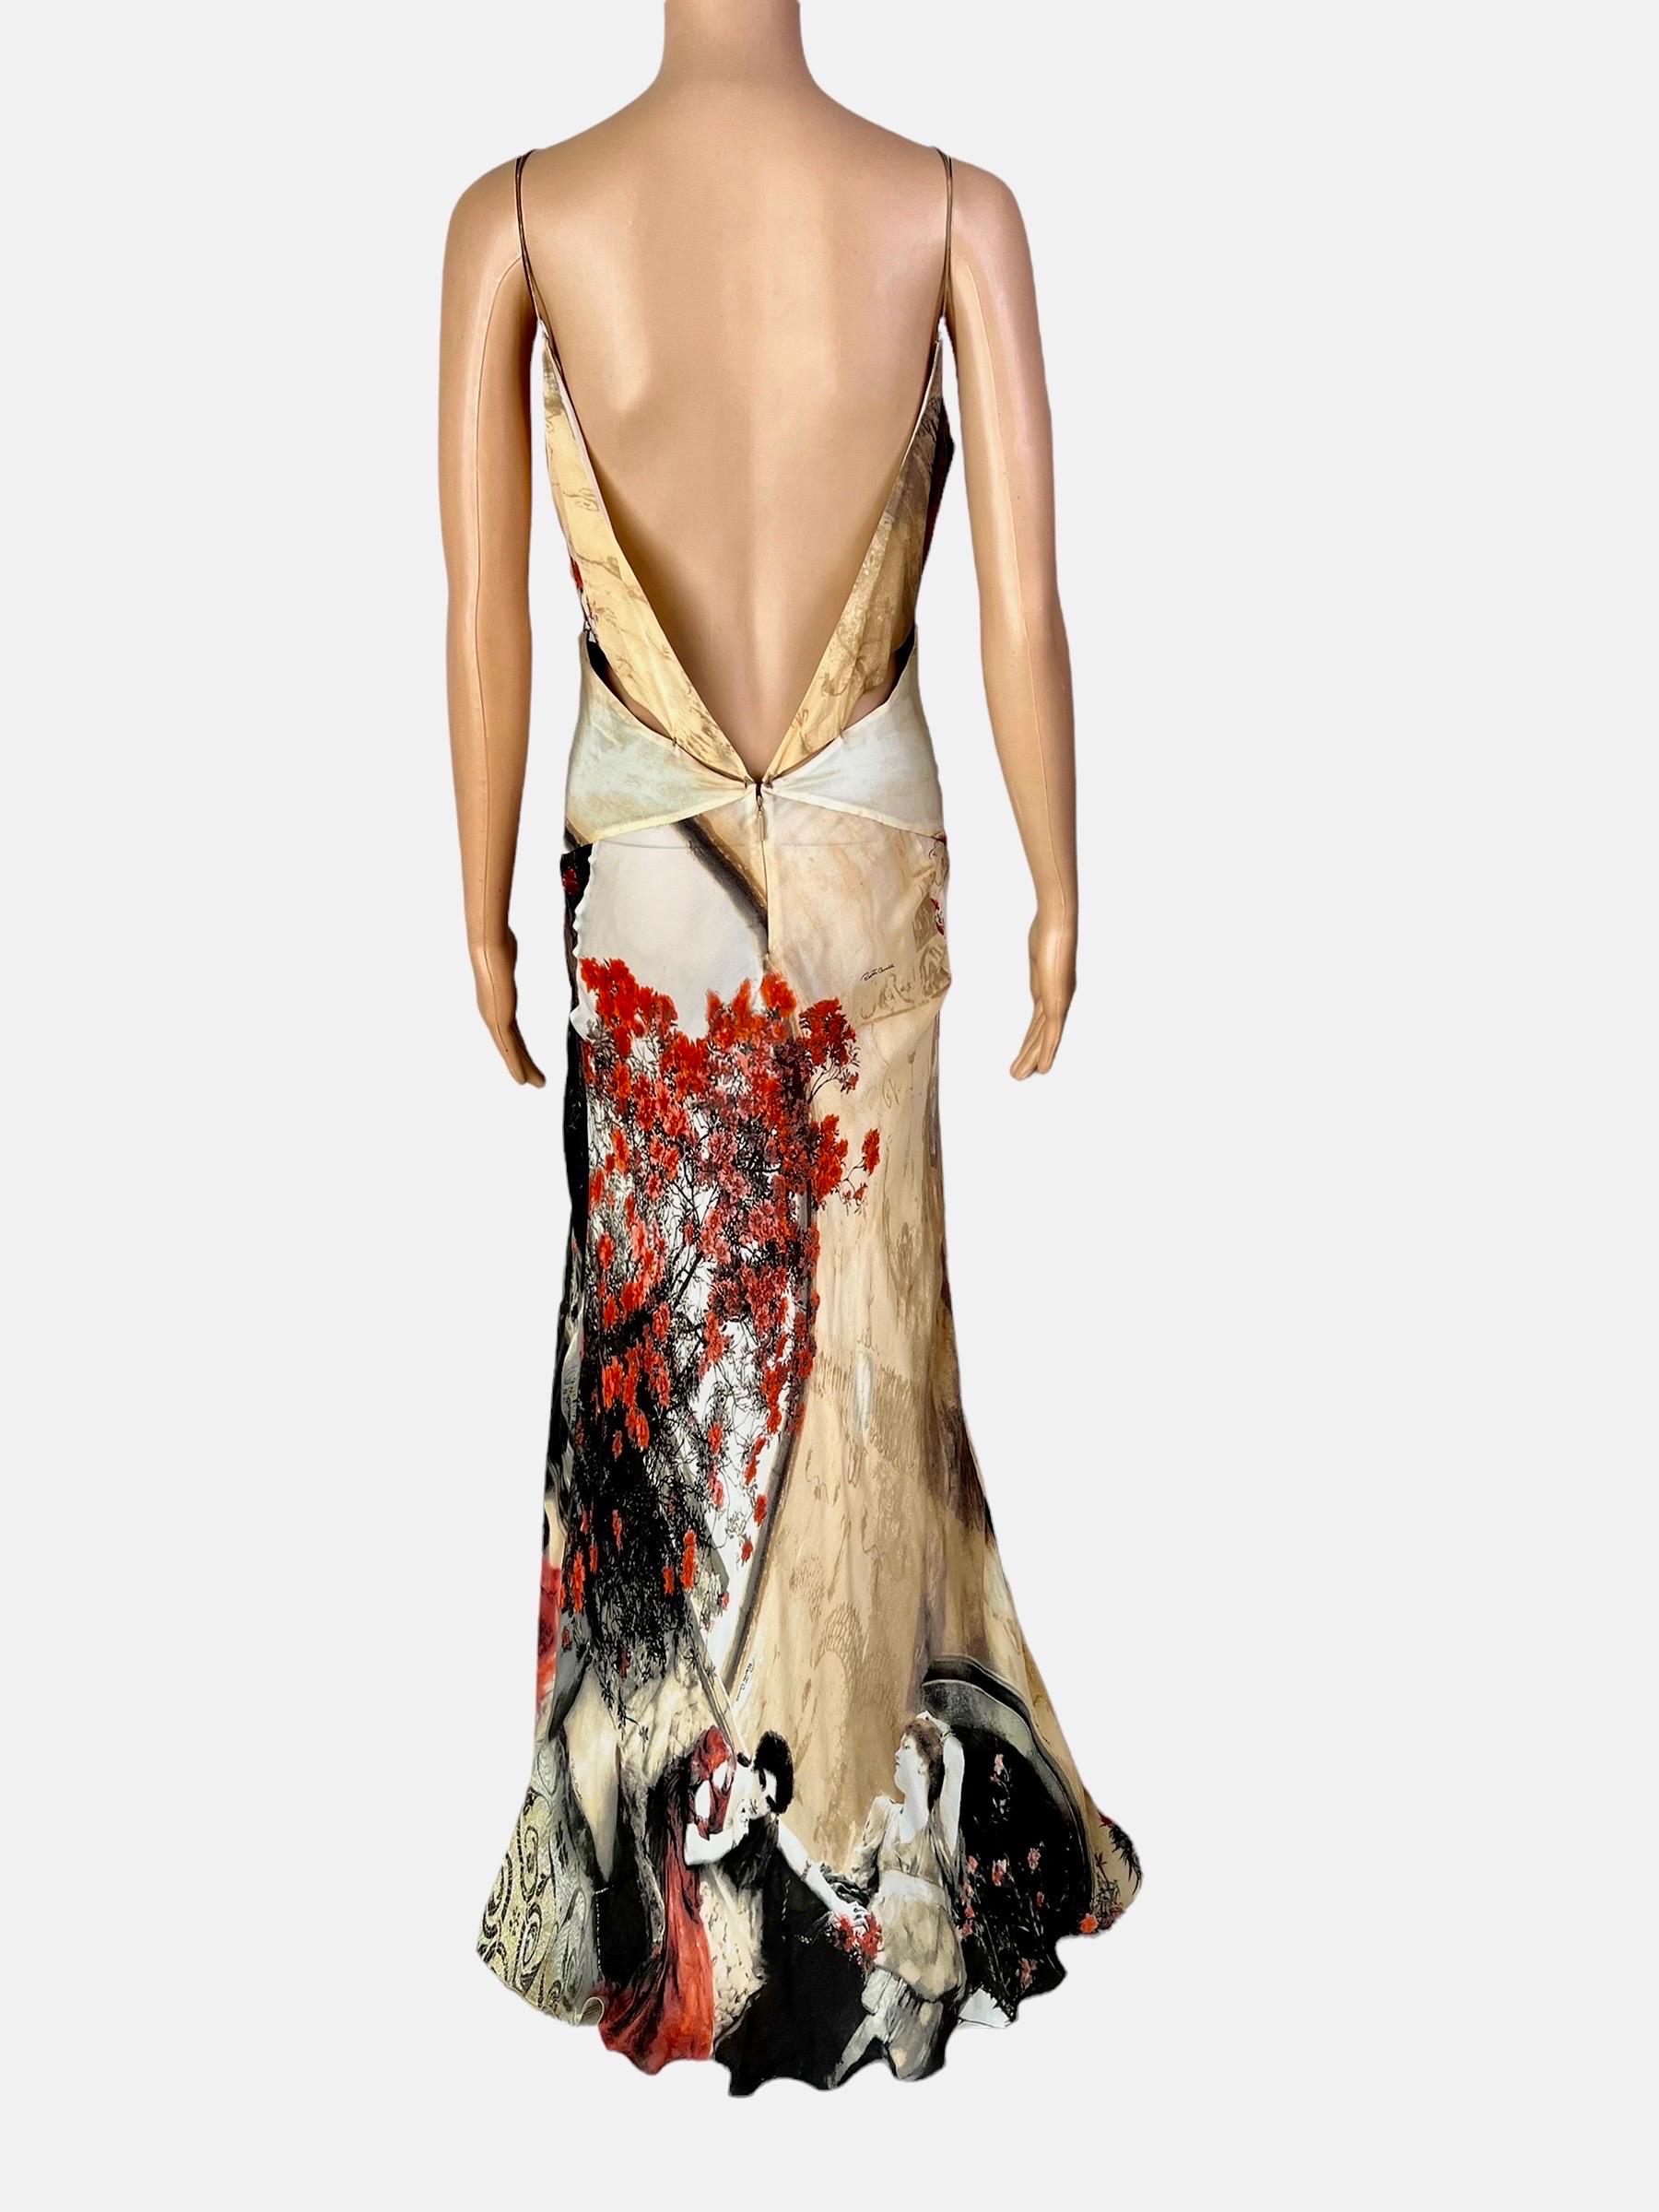 Roberto Cavalli S/S 2004 Runway Cutout High Slit Silk Slip Evening Dress Gown For Sale 6